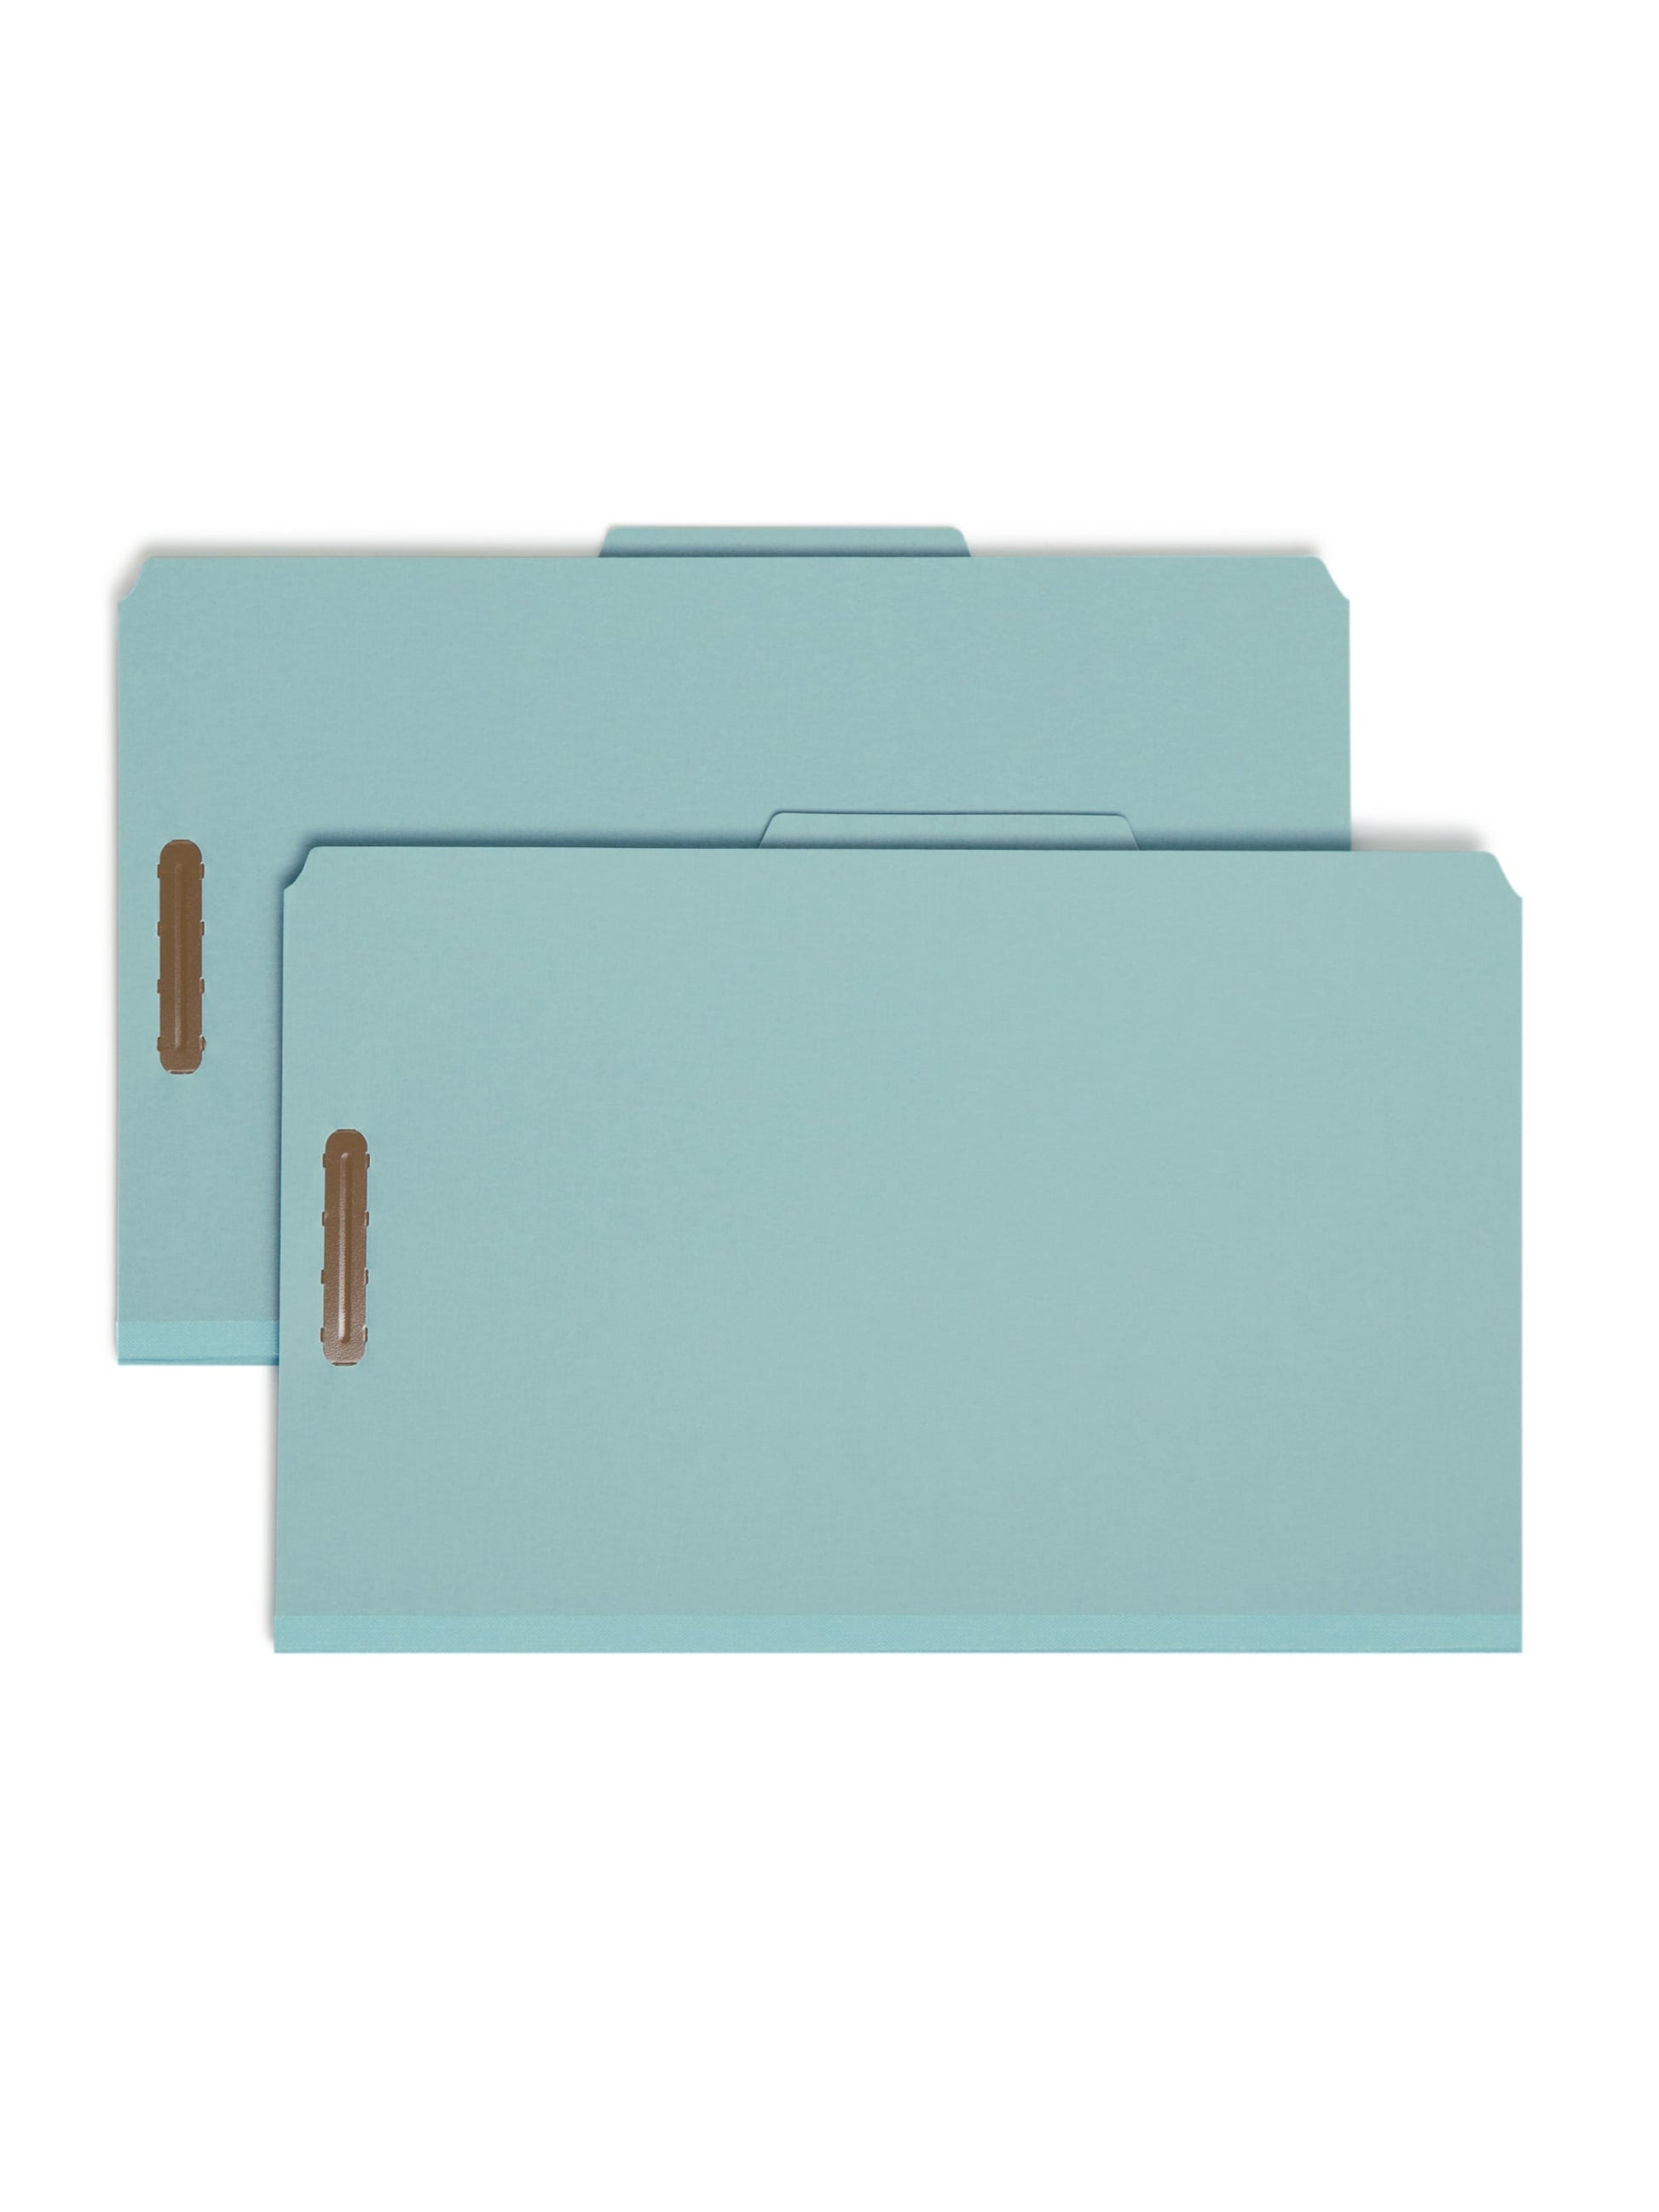 Pressboard Classification File Folders, 2 Dividers, 2 inch Expansion, Blue Color, Legal Size, Set of 0, 30086486190214